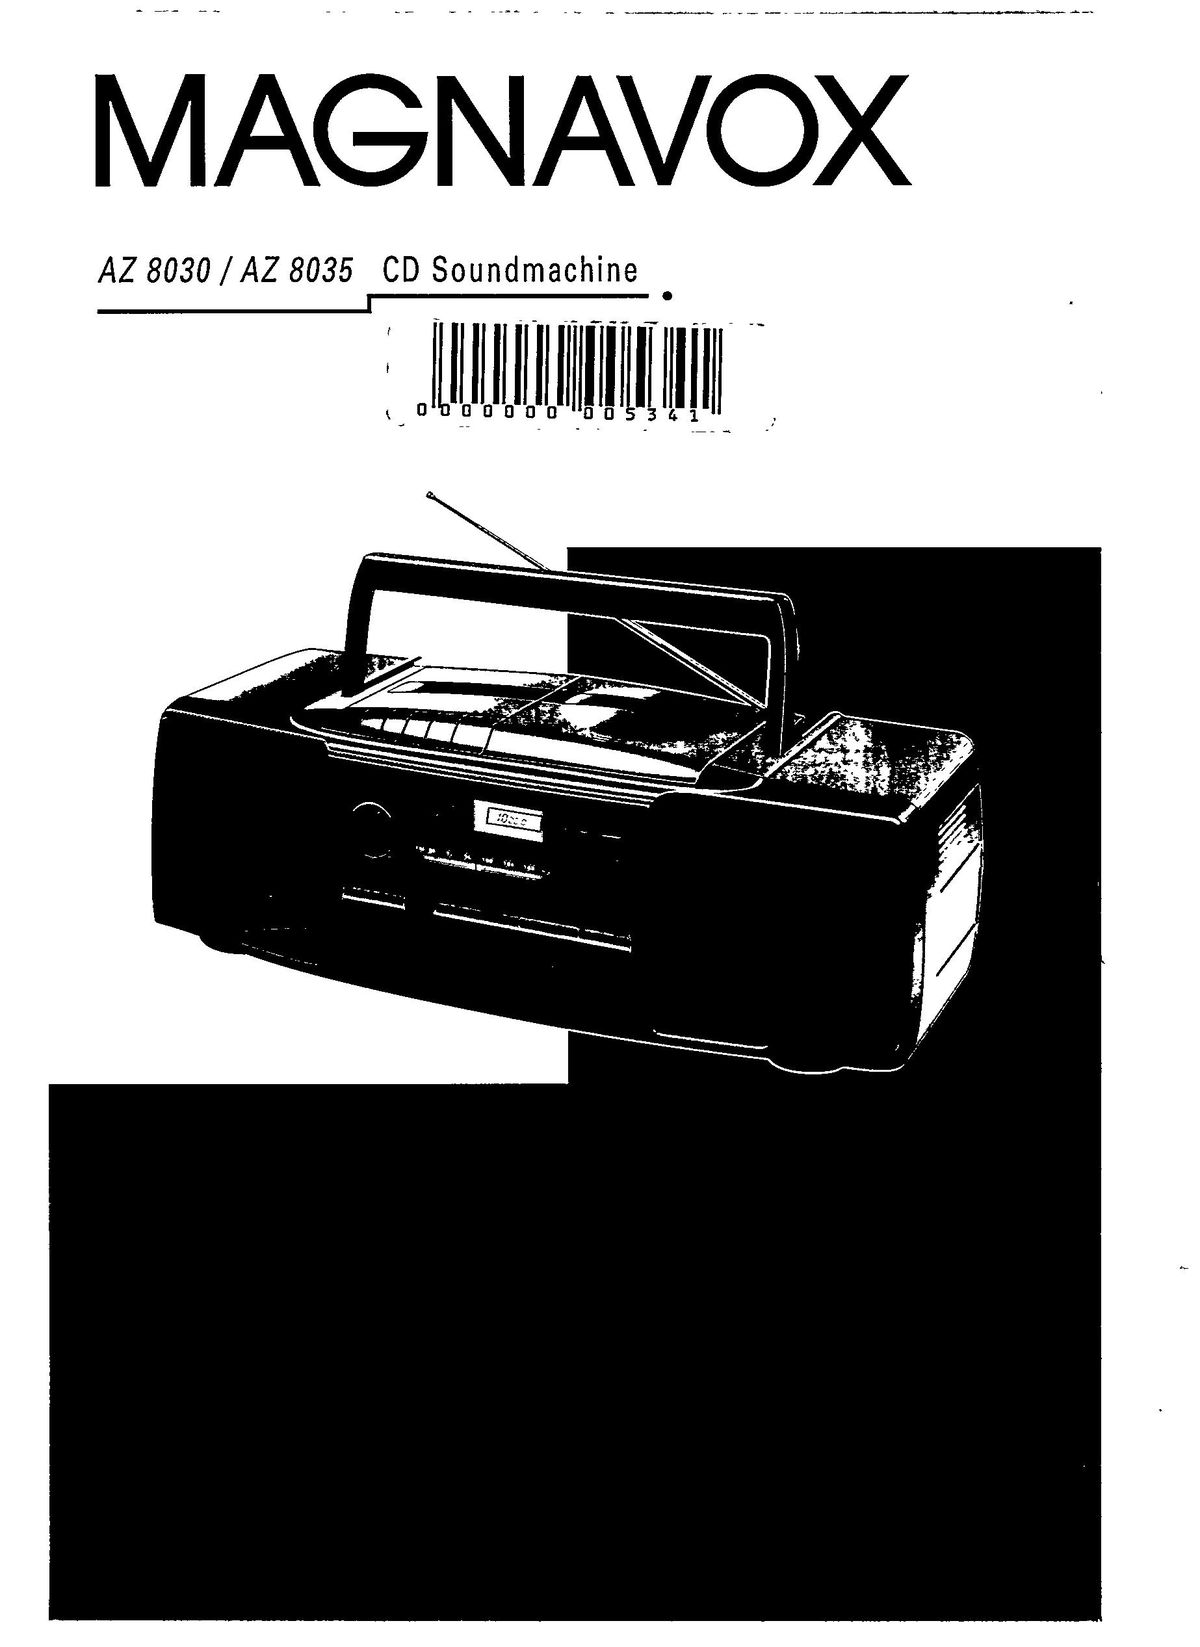 Magnavox AZ 8035 Portable CD Player User Manual